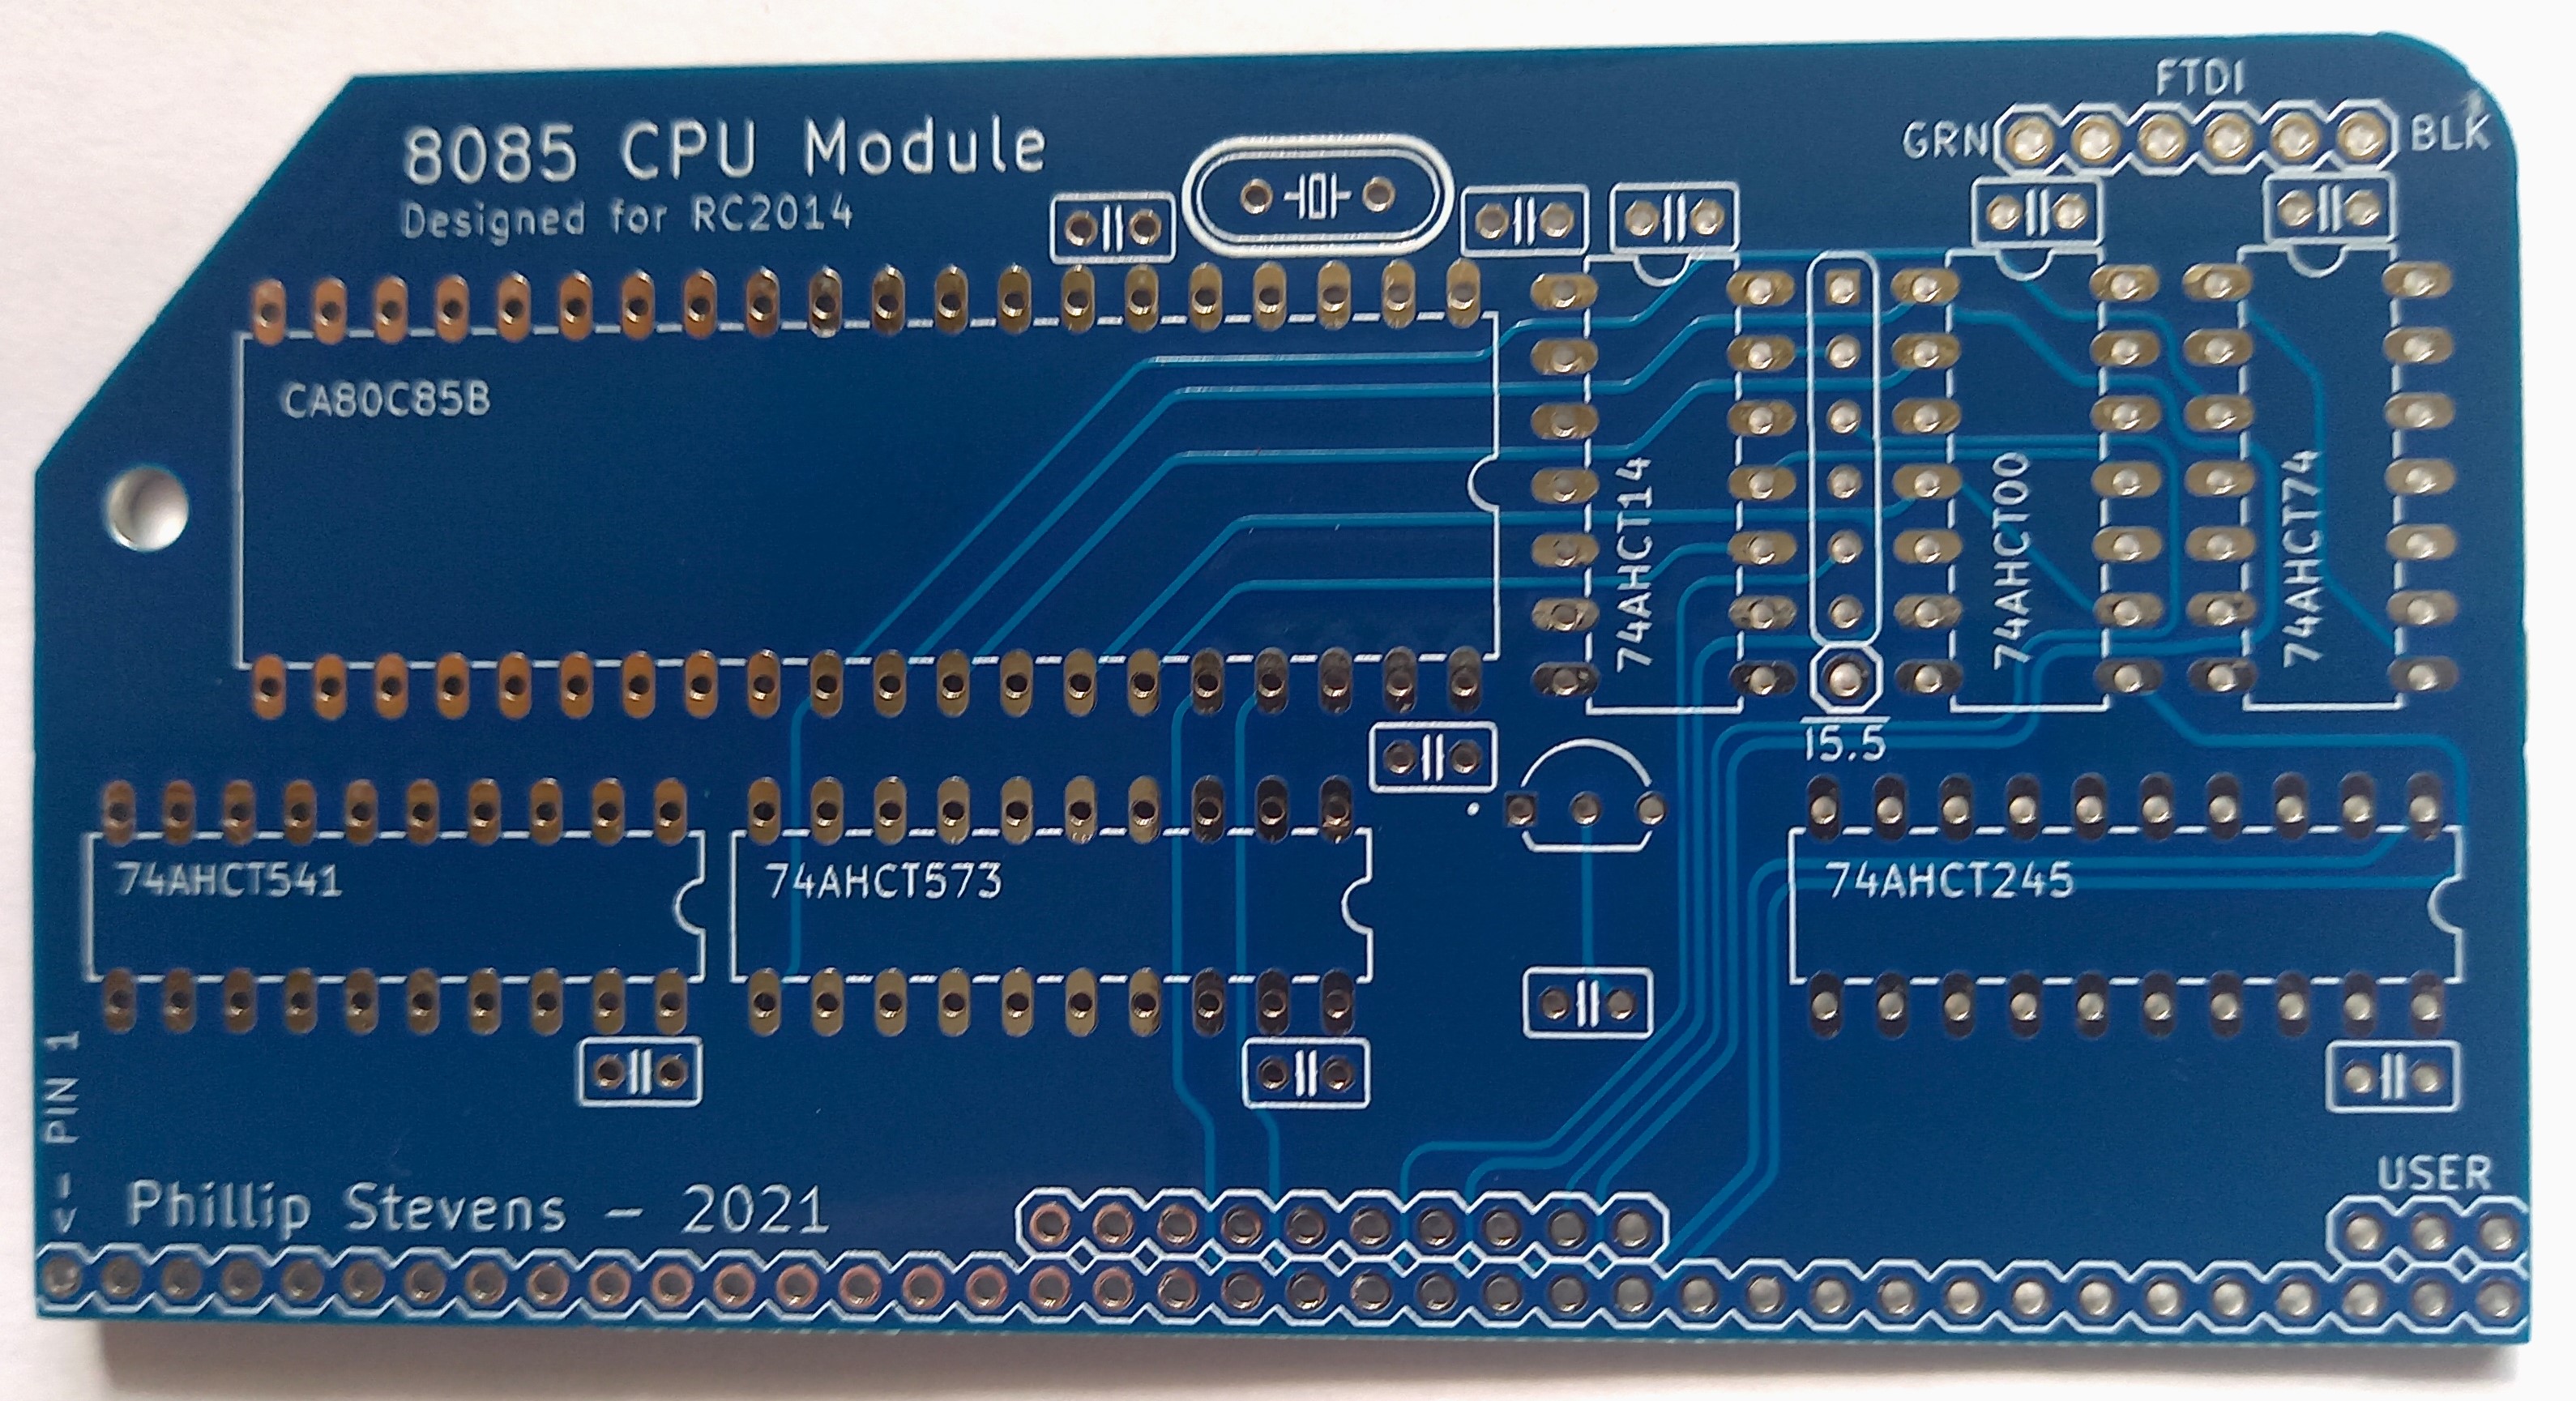 New 8085 CPU Module designed for RC2014